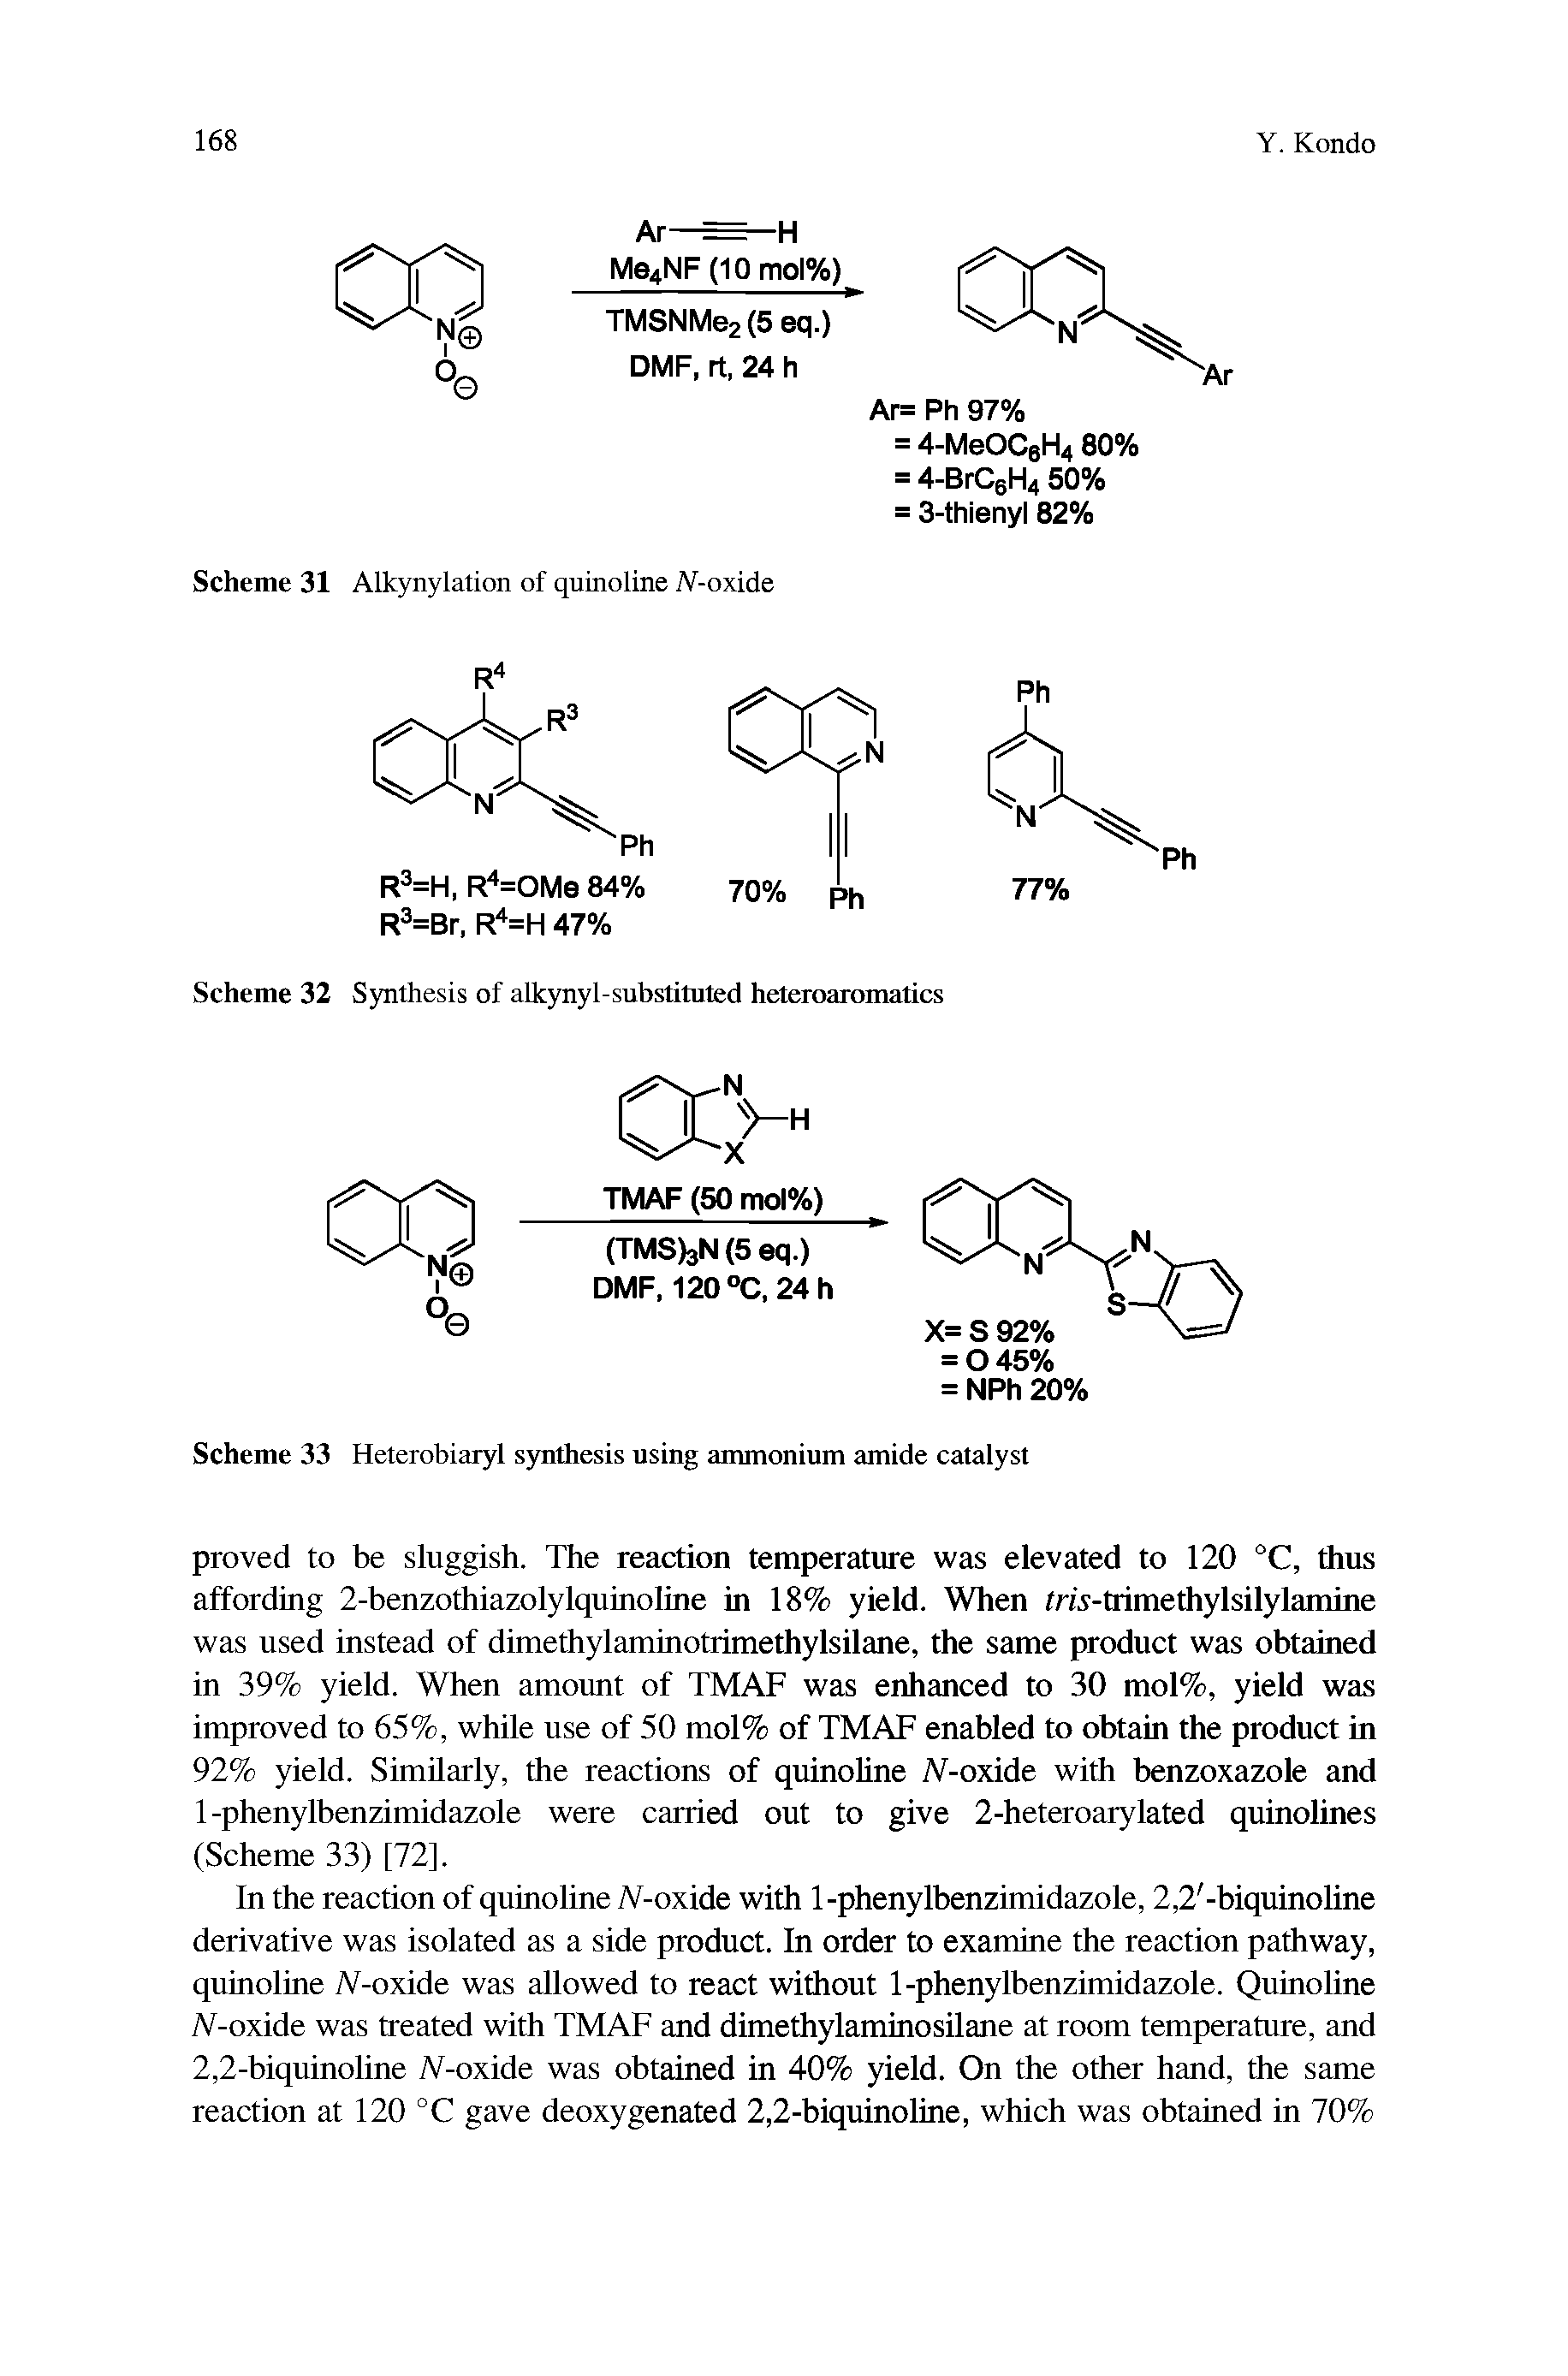 Scheme 33 Heterobiaryl synthesis using ammonium amide catalyst...